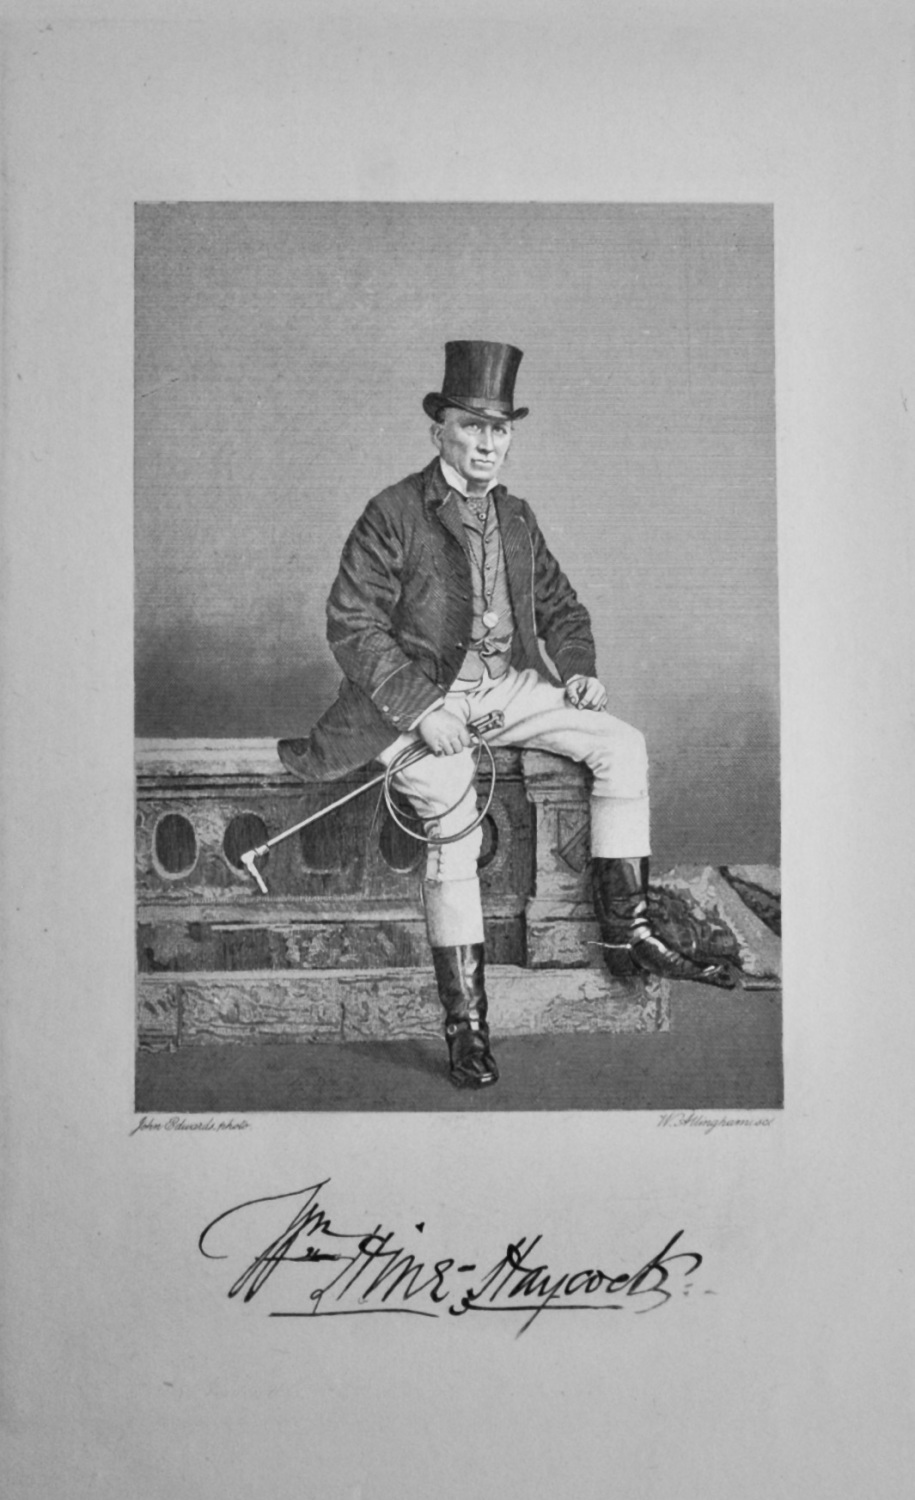 Mr. William Hine-Haycock.  (Honourable Secretary of the Old- Surrey Foxhoun